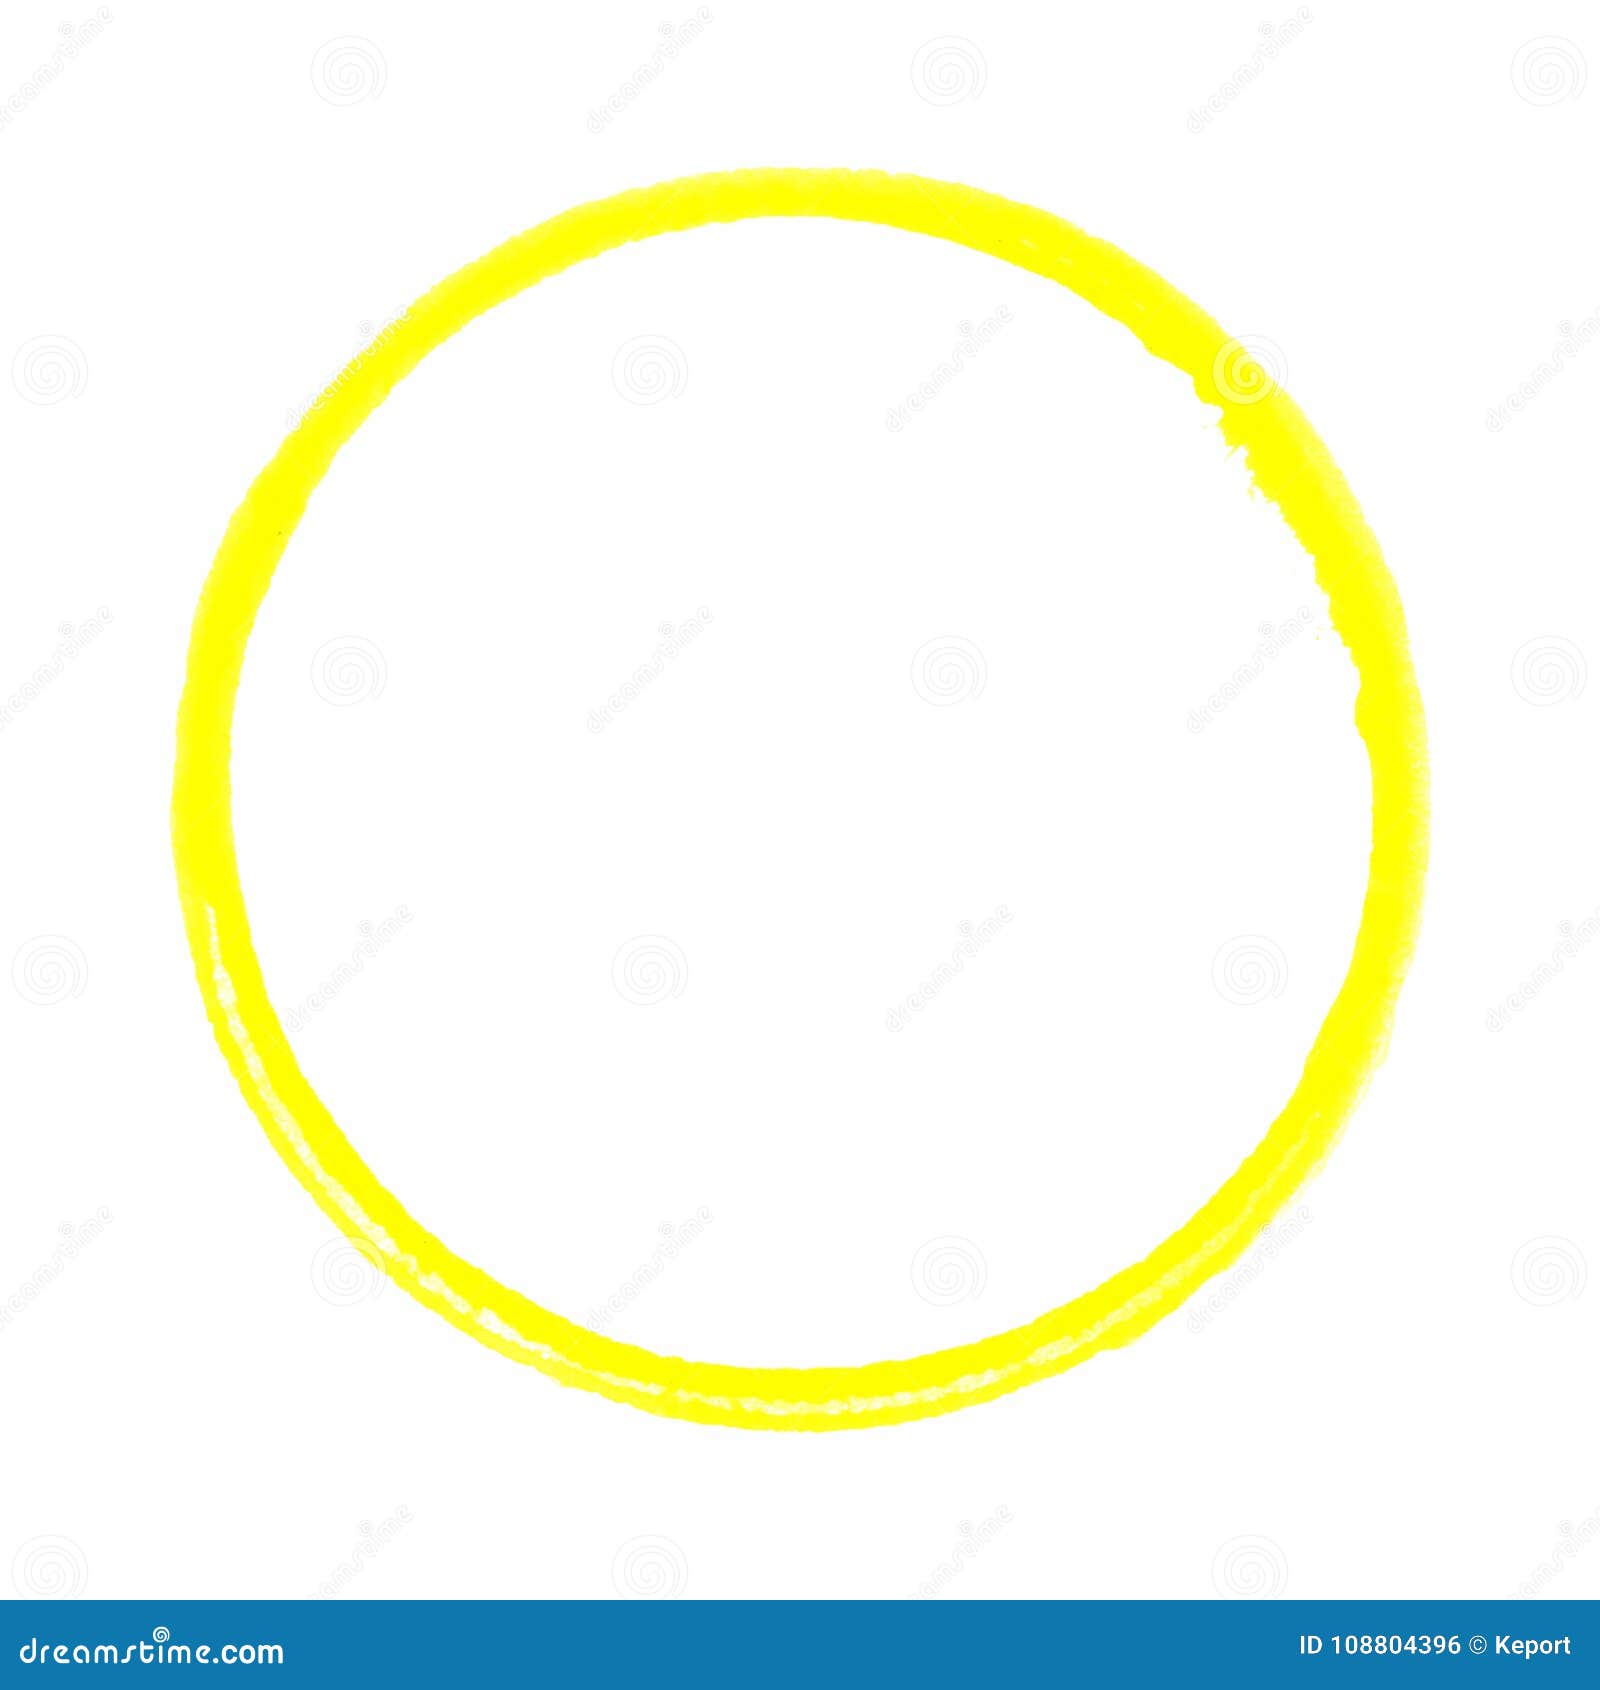 Желтый круг игра. Желтый круг на белом фоне. Желтый круг для фотошопа. Сияния кружок жёлтый. Круг желтый 15*15.